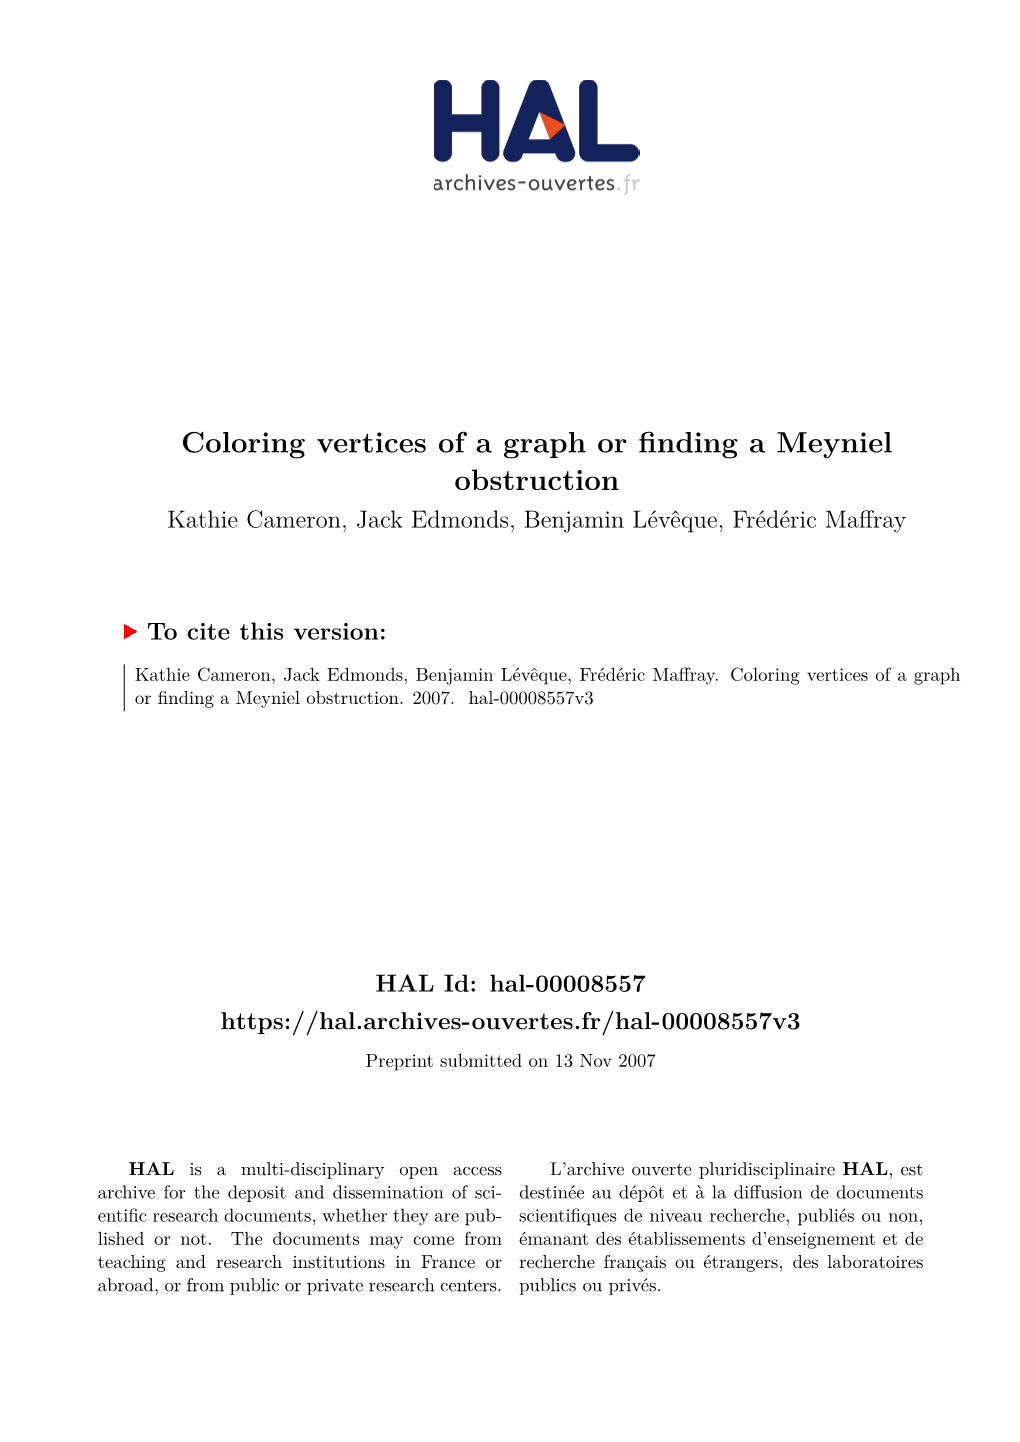 Coloring Vertices of a Graph Or Finding a Meyniel Obstruction Kathie Cameron, Jack Edmonds, Benjamin Lévêque, Frédéric Maffray